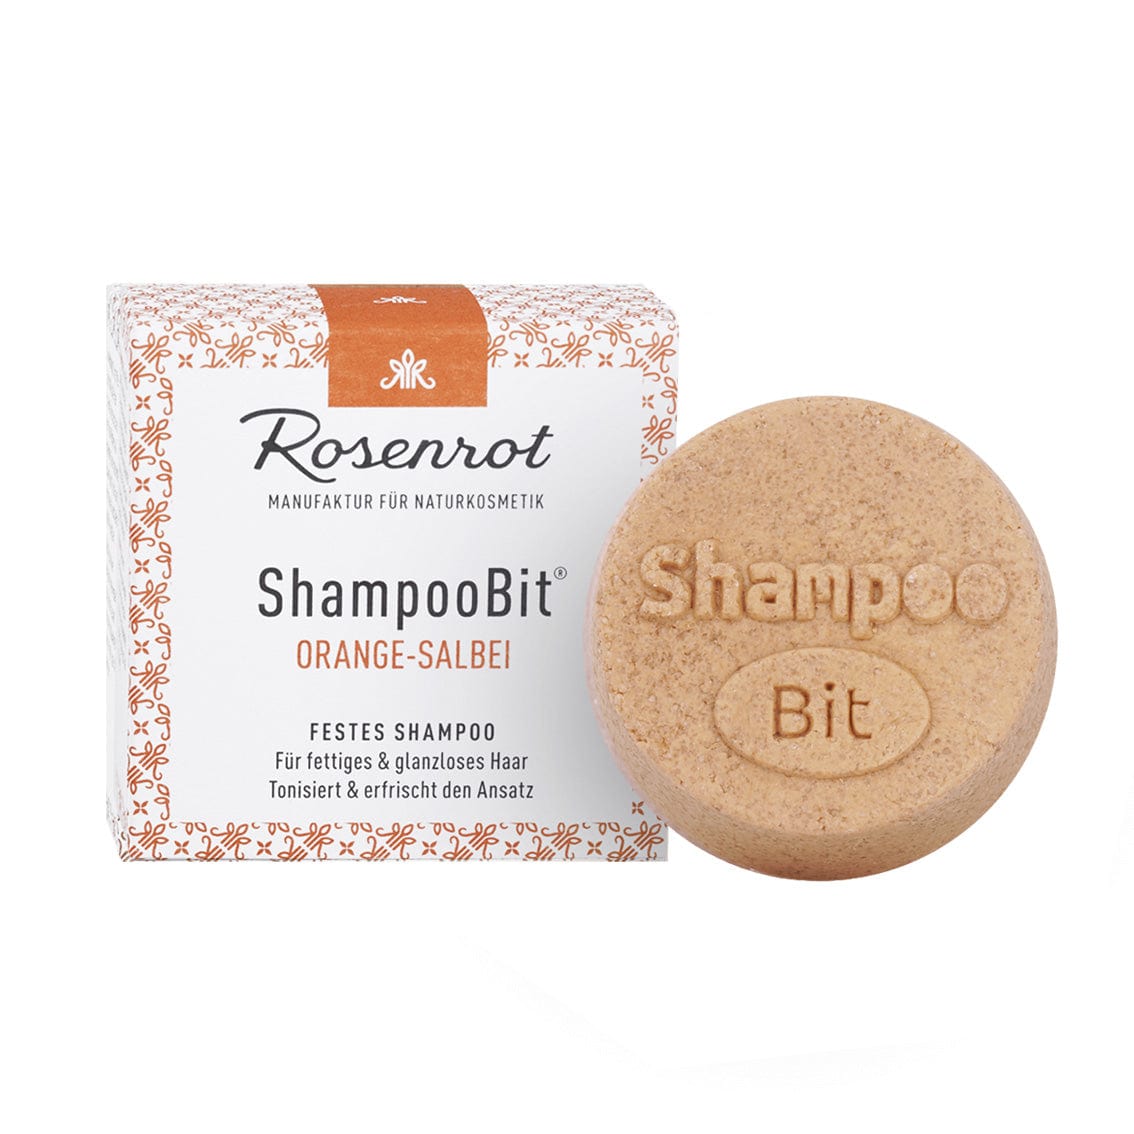 rosenrot naturkosmetik festes shampoo shampoobit